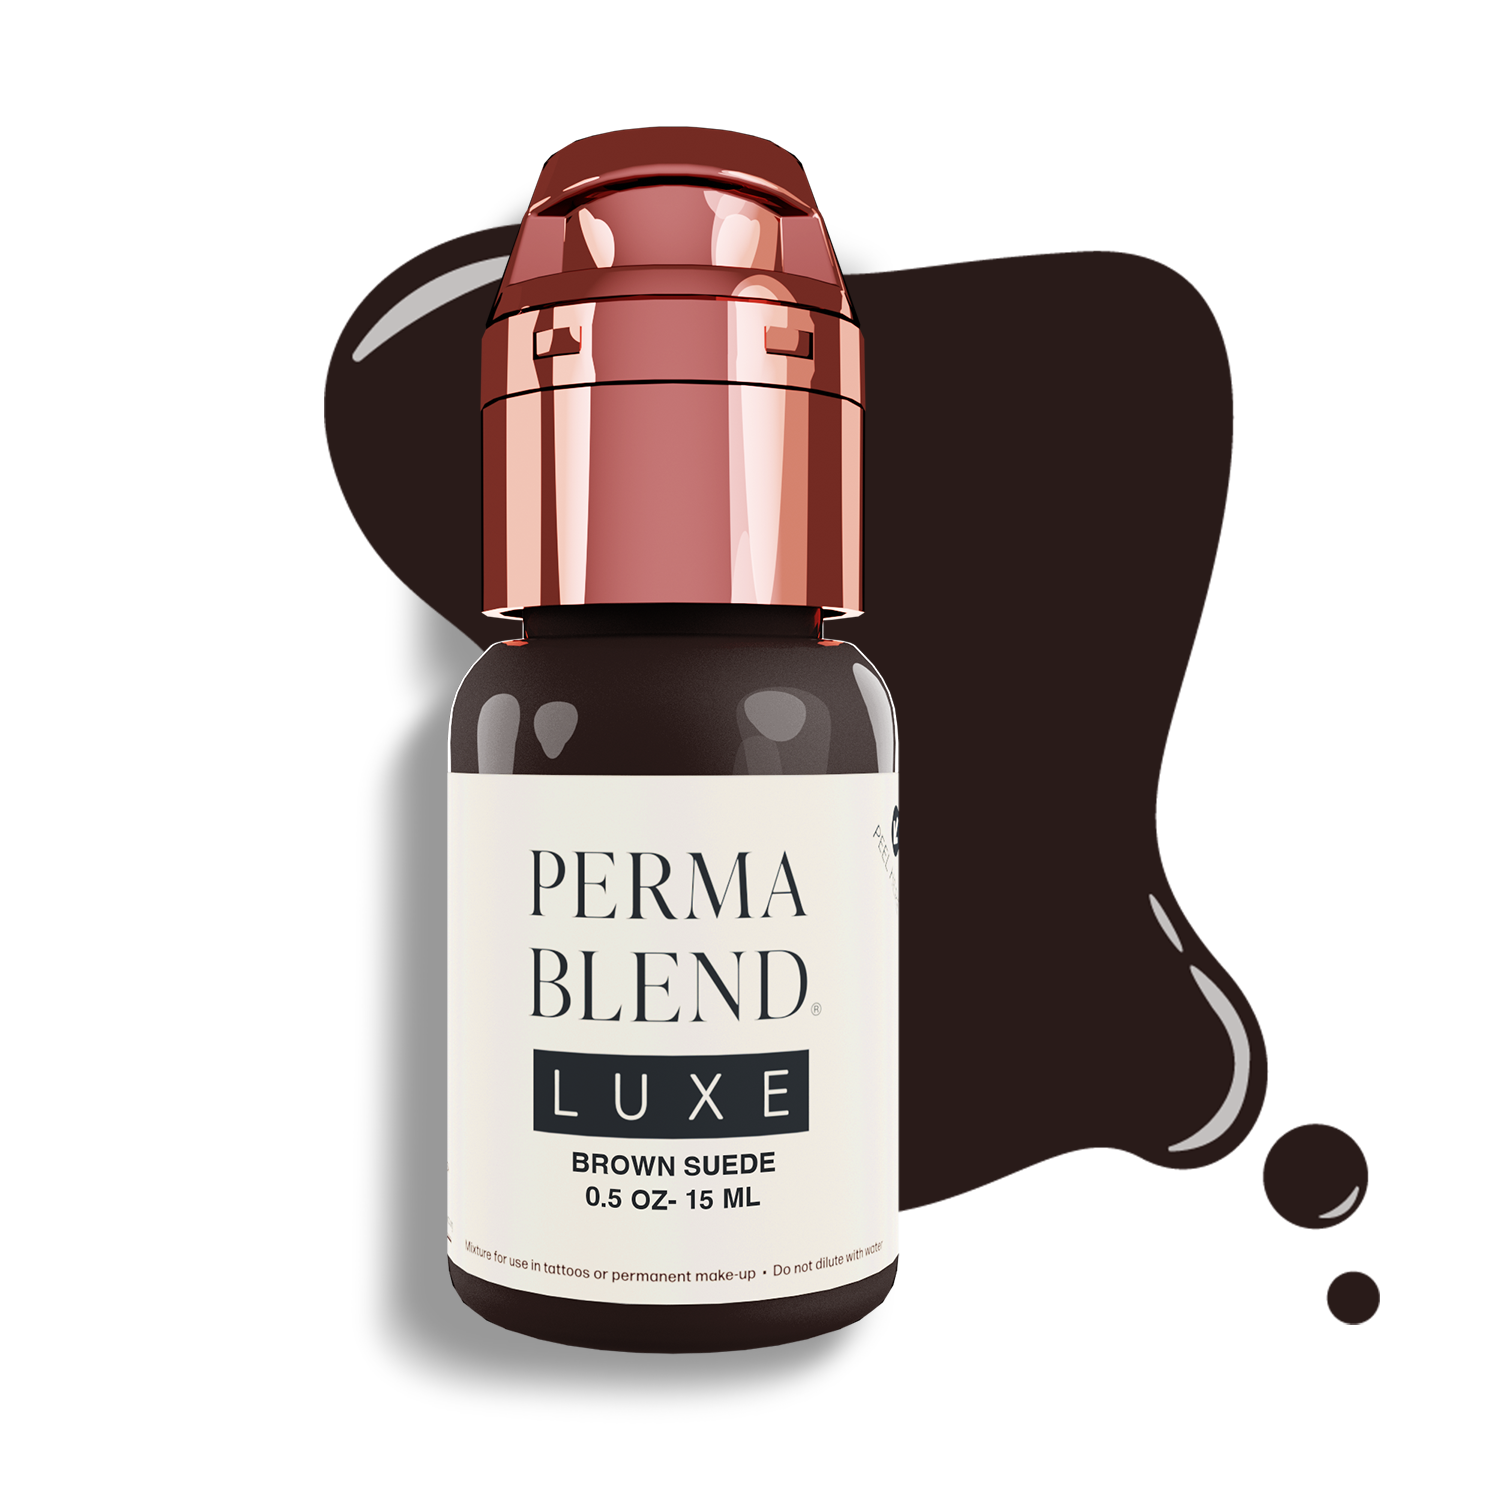 Perma Blend Luxe PMU Ink | Brown Suede | Brows